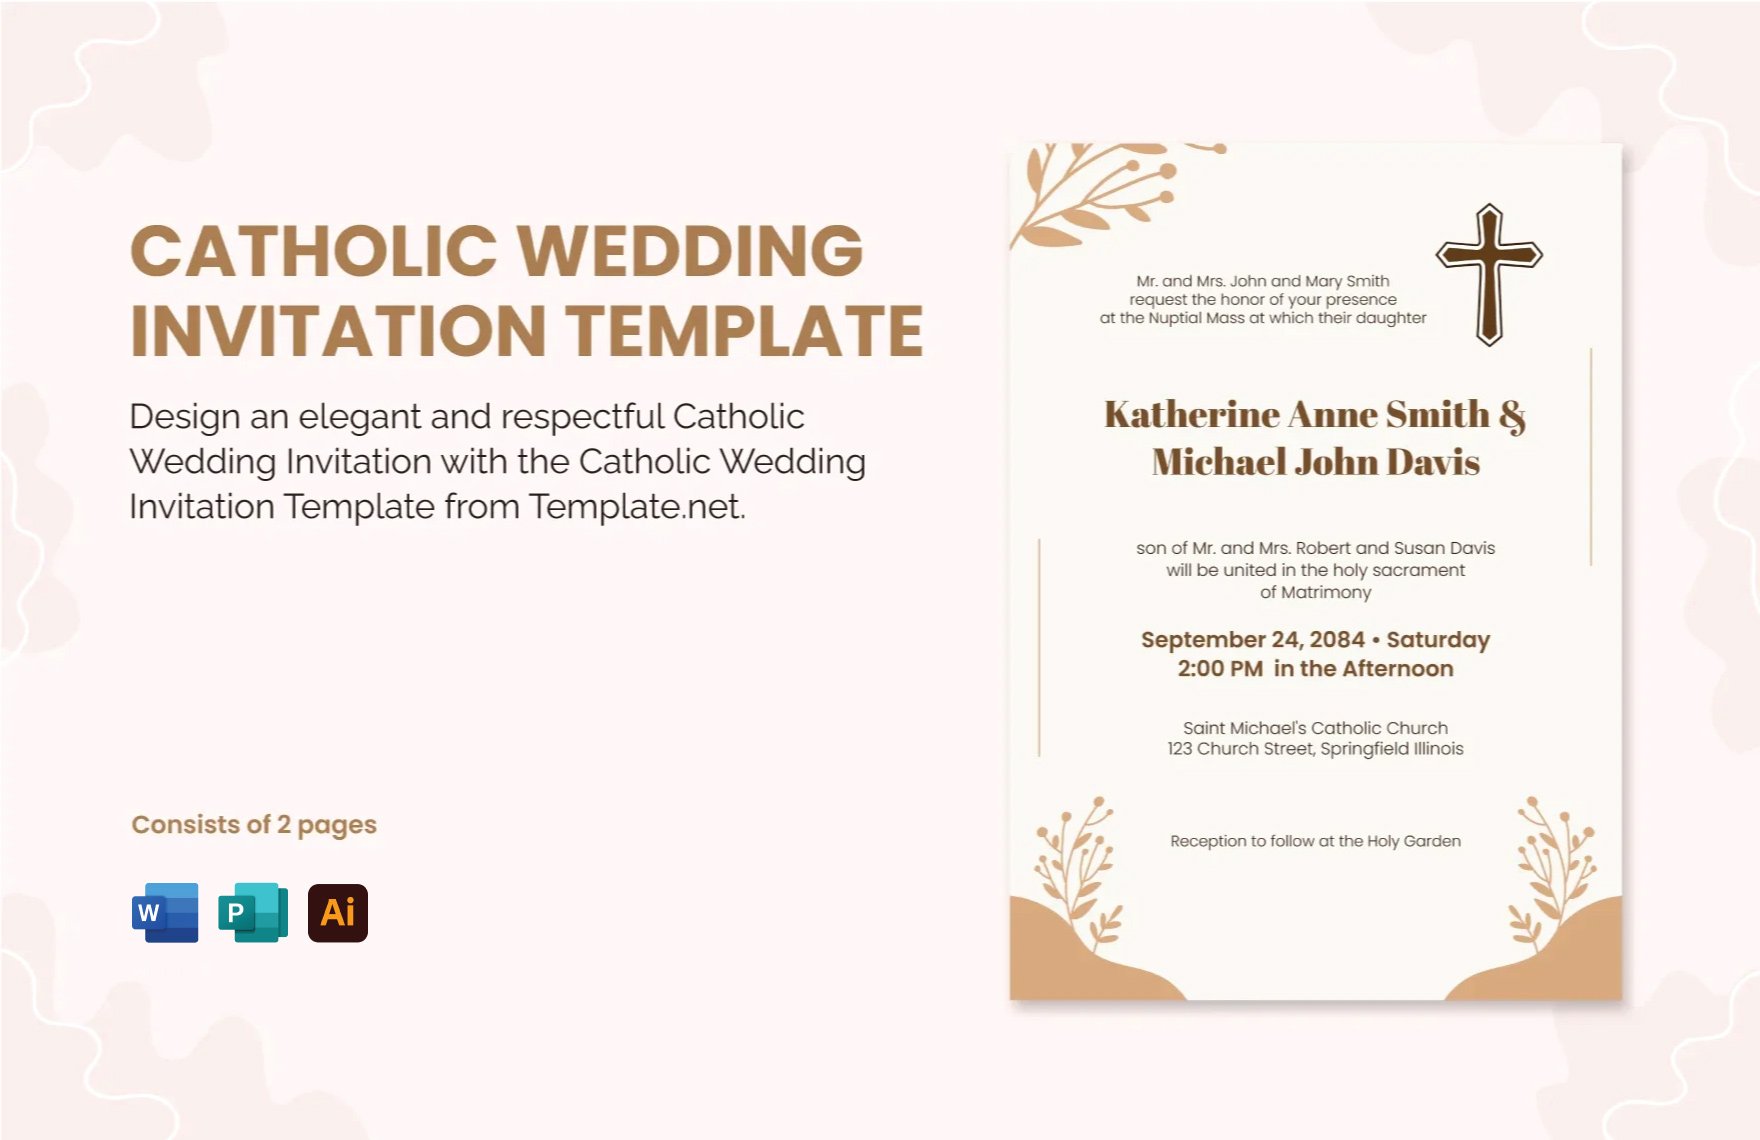 Catholic Wedding Invitation Template in Word, Illustrator, Publisher